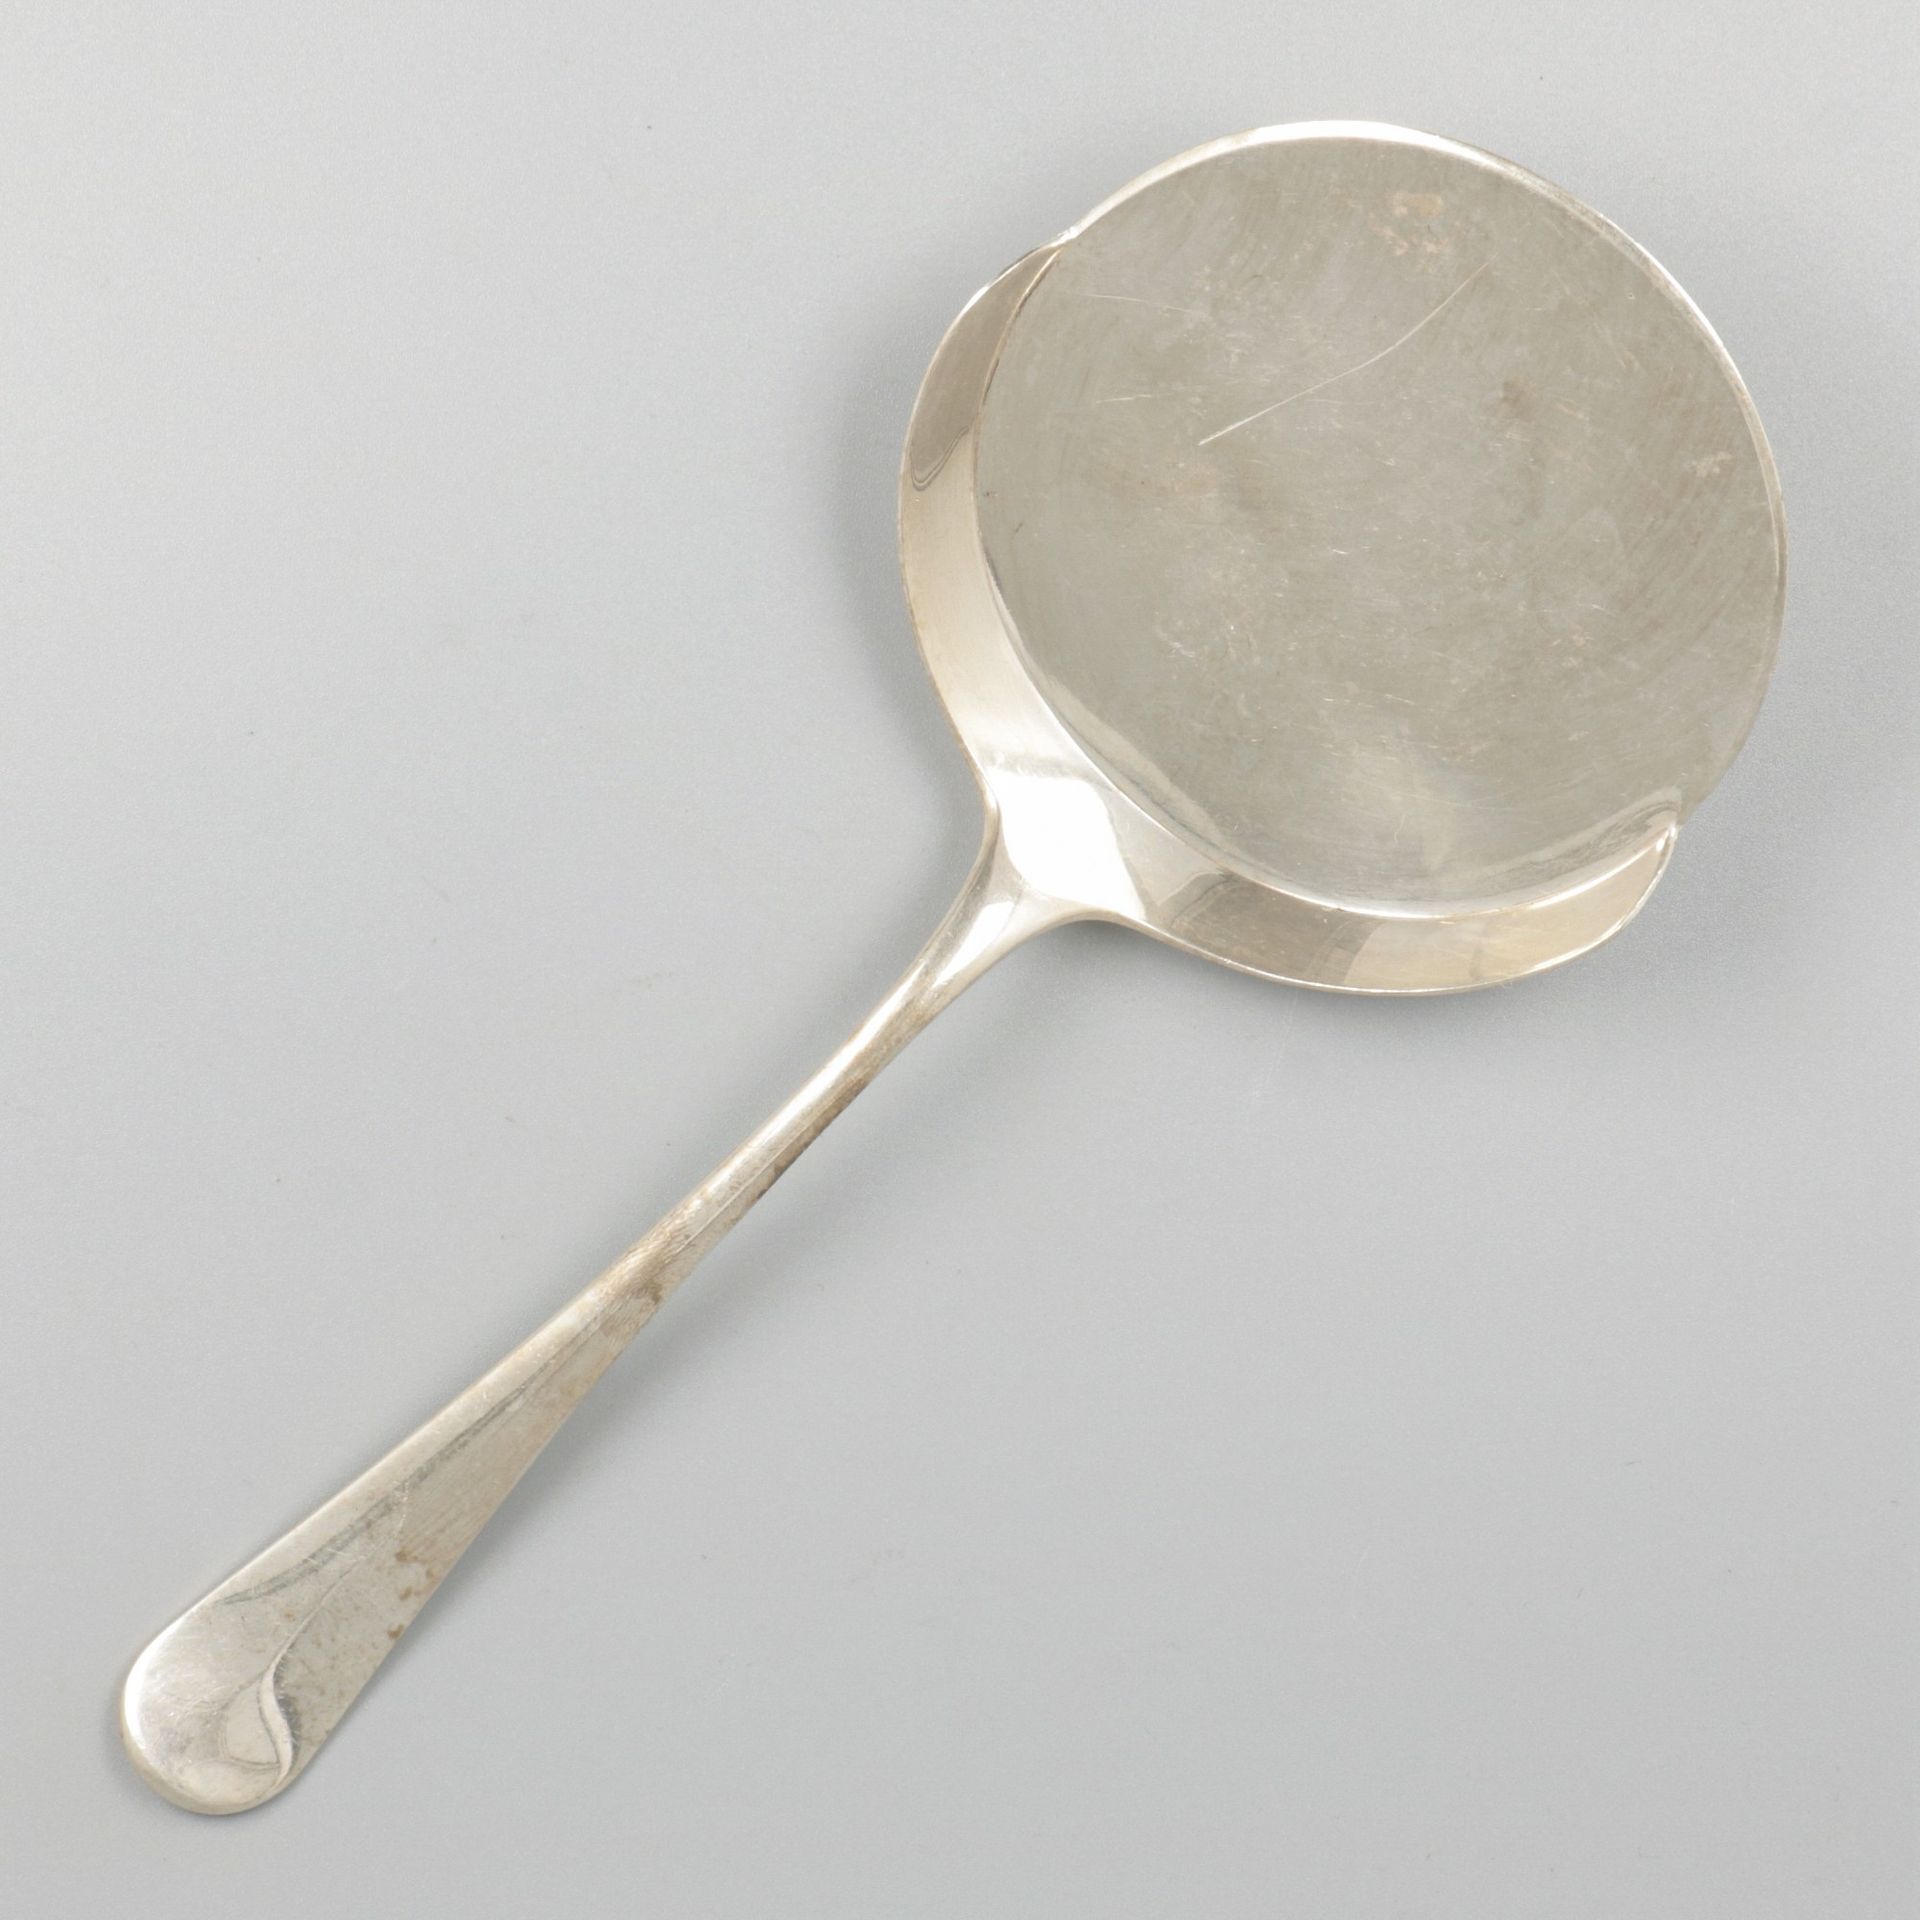 Fried egg scoop silver. "Hollands glad" or Dutch smooth. The Netherlands, Zeist,&hellip;